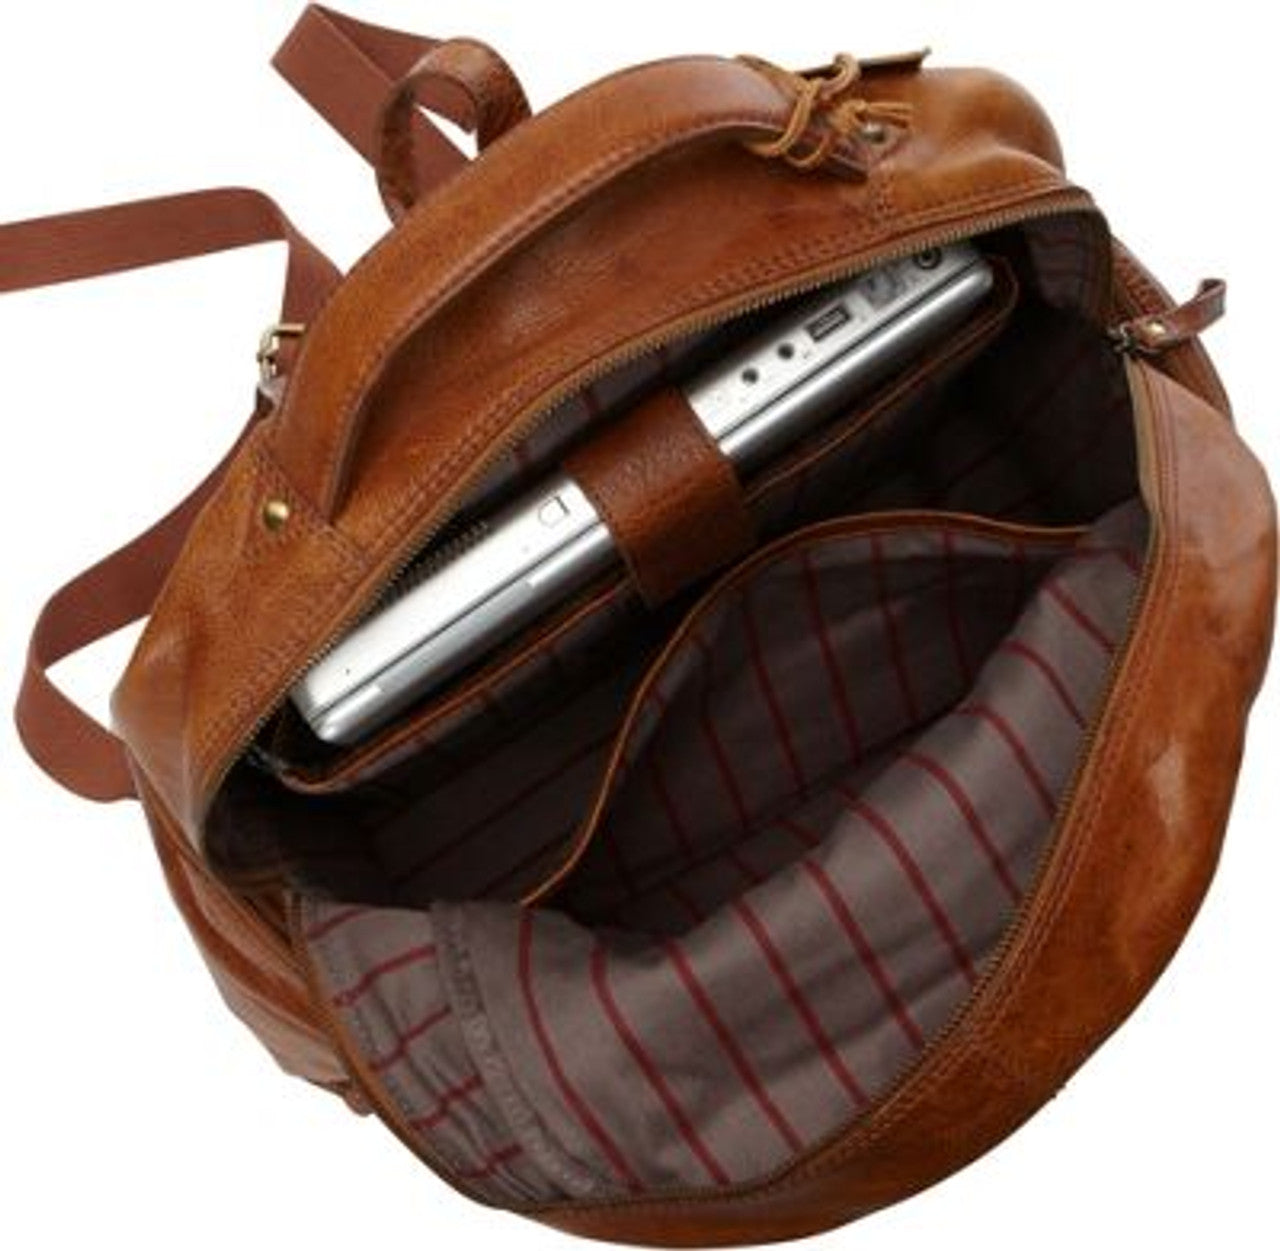 Rugged Backpack - Leather Loom